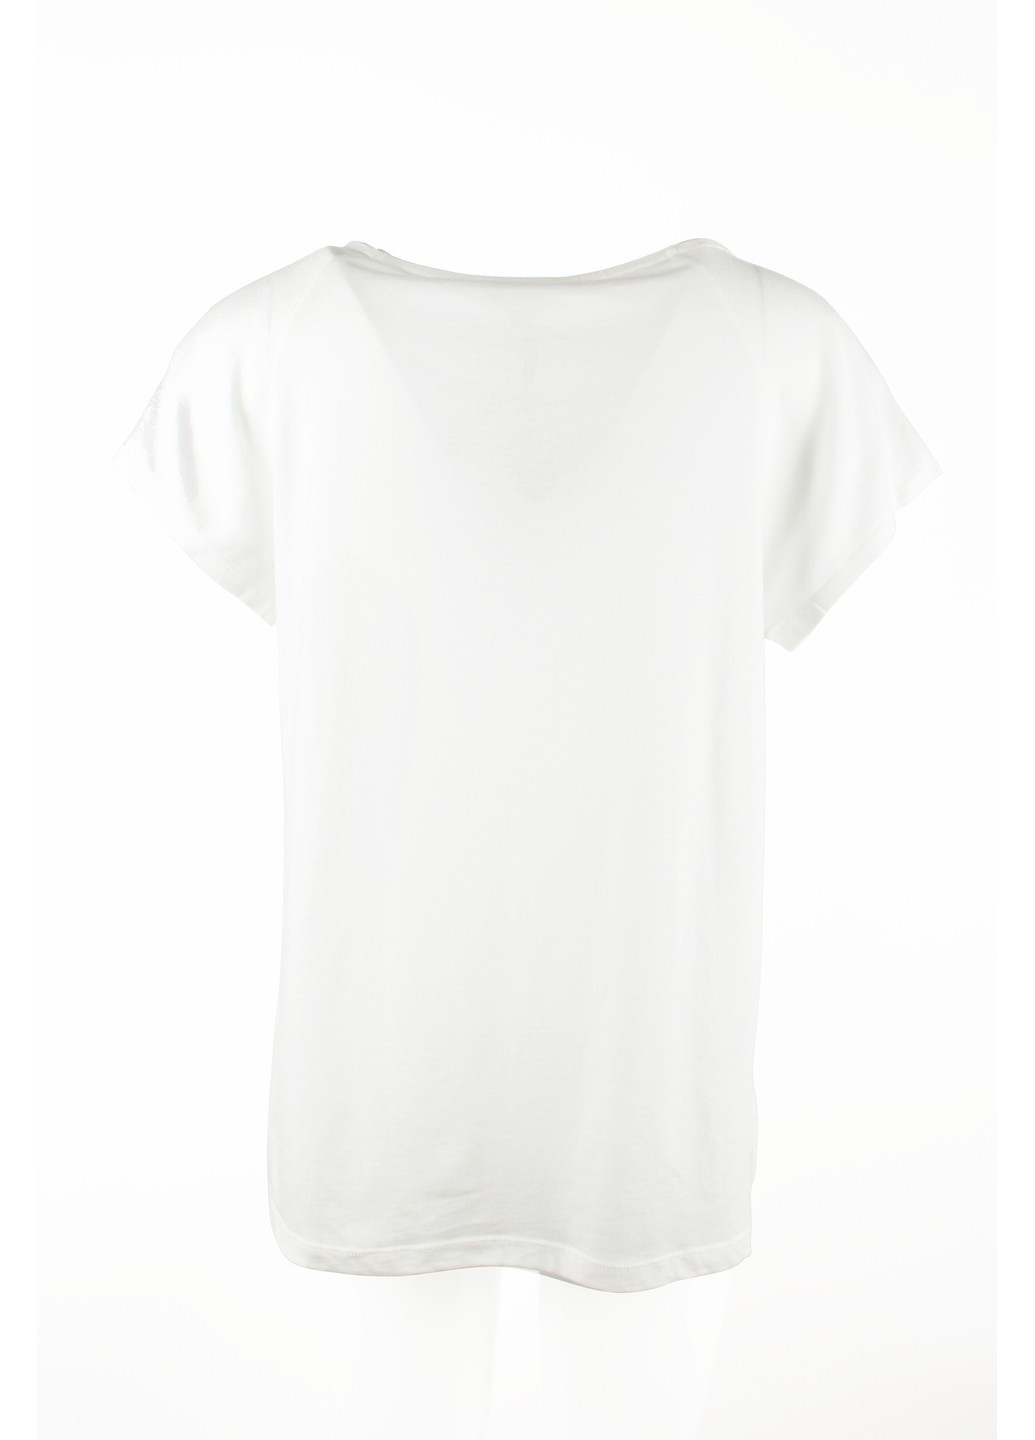 Белая летняя футболка женская 000944 Street One